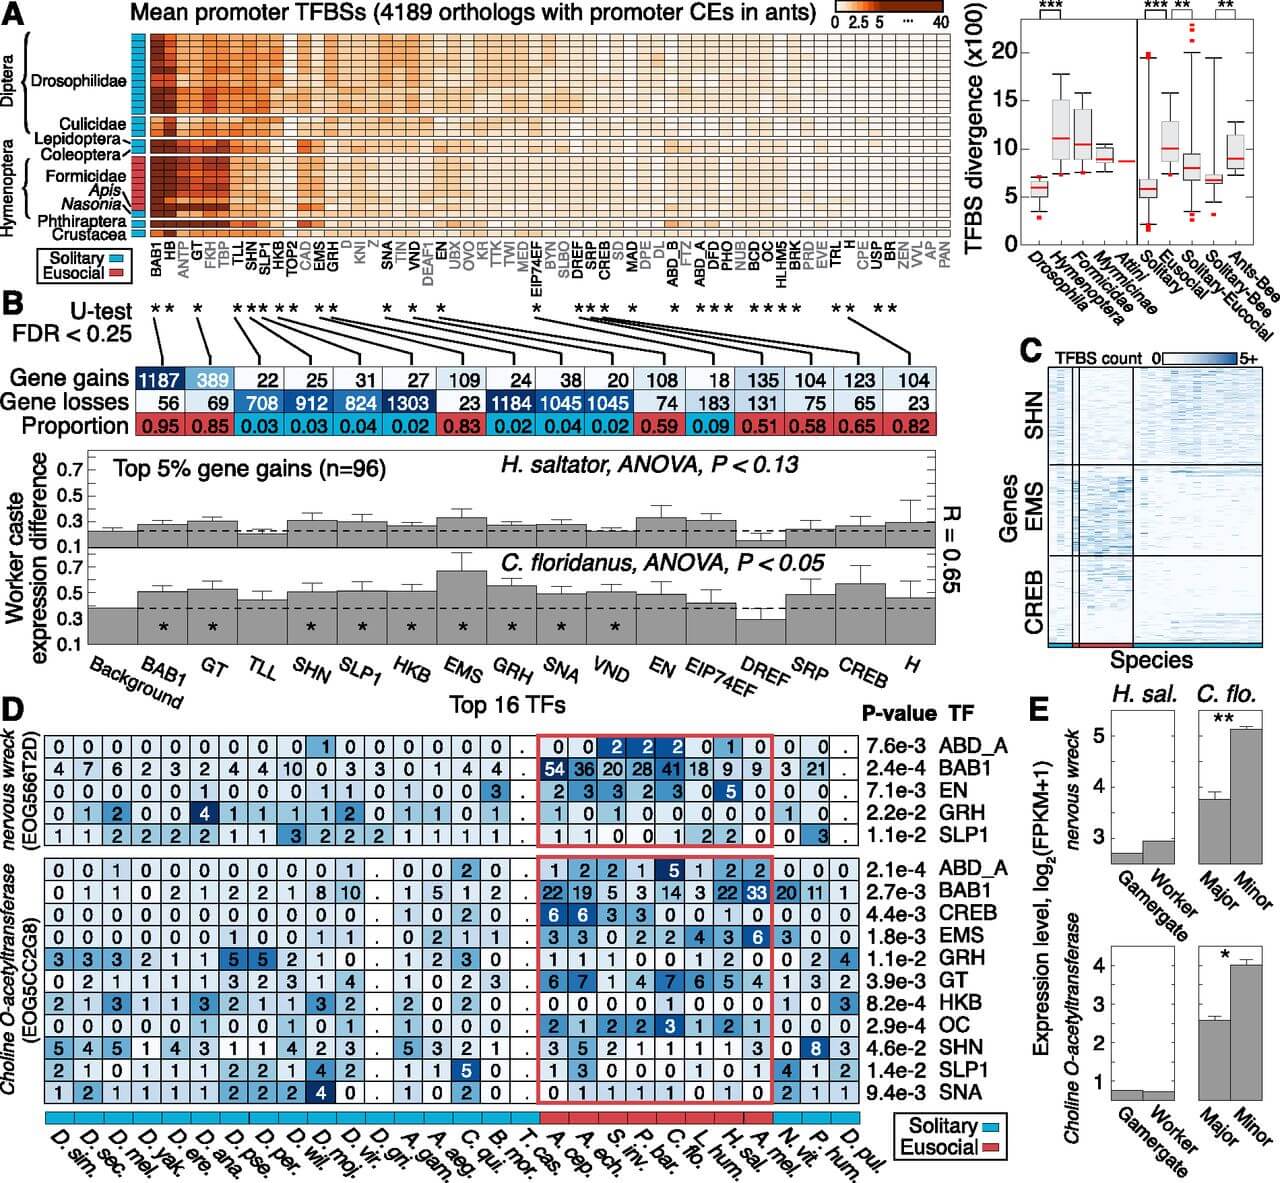 Evolution of transcription factor binding sites